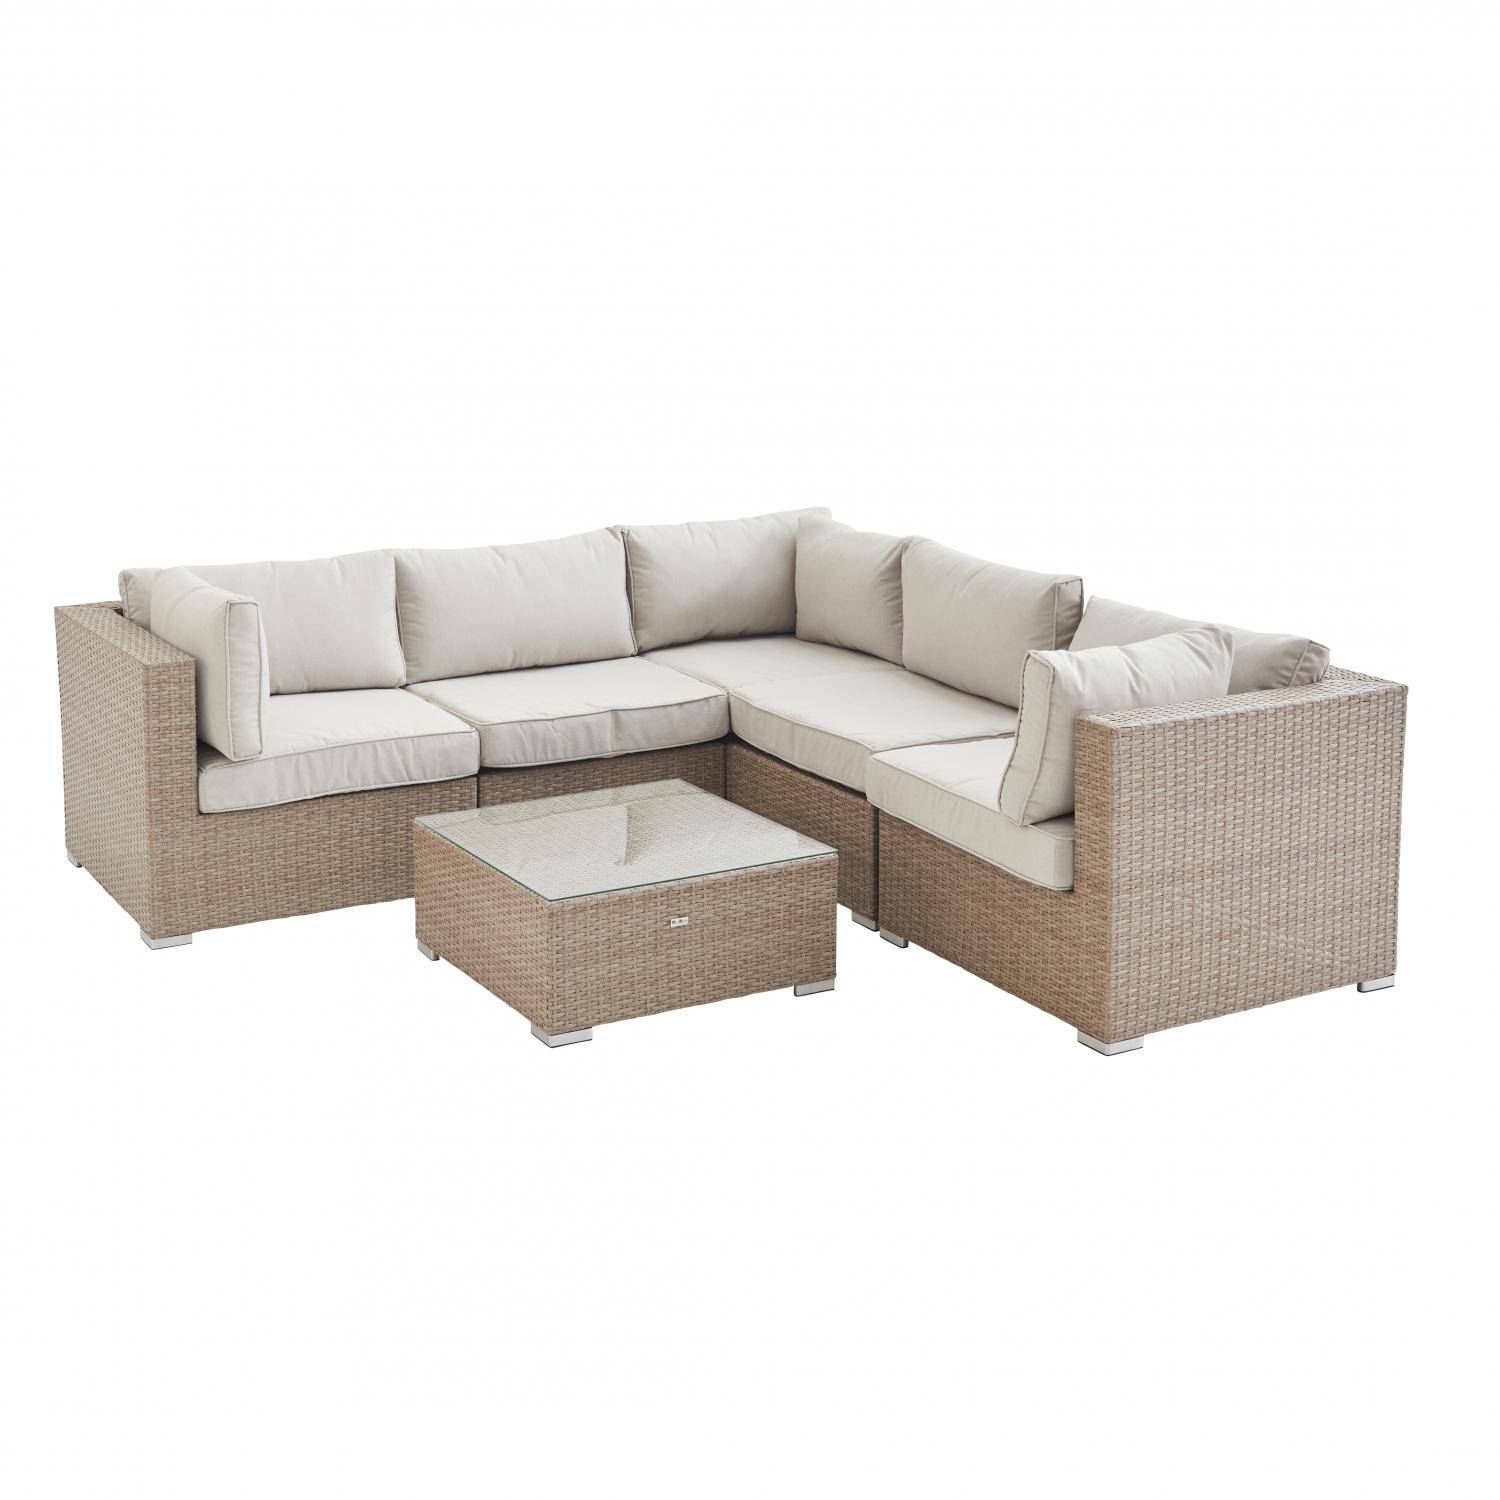 Ready assembled 5-seater polyrattan corner garden sofa set with coffee table, Napoli. Beige,sweeek,Photo2